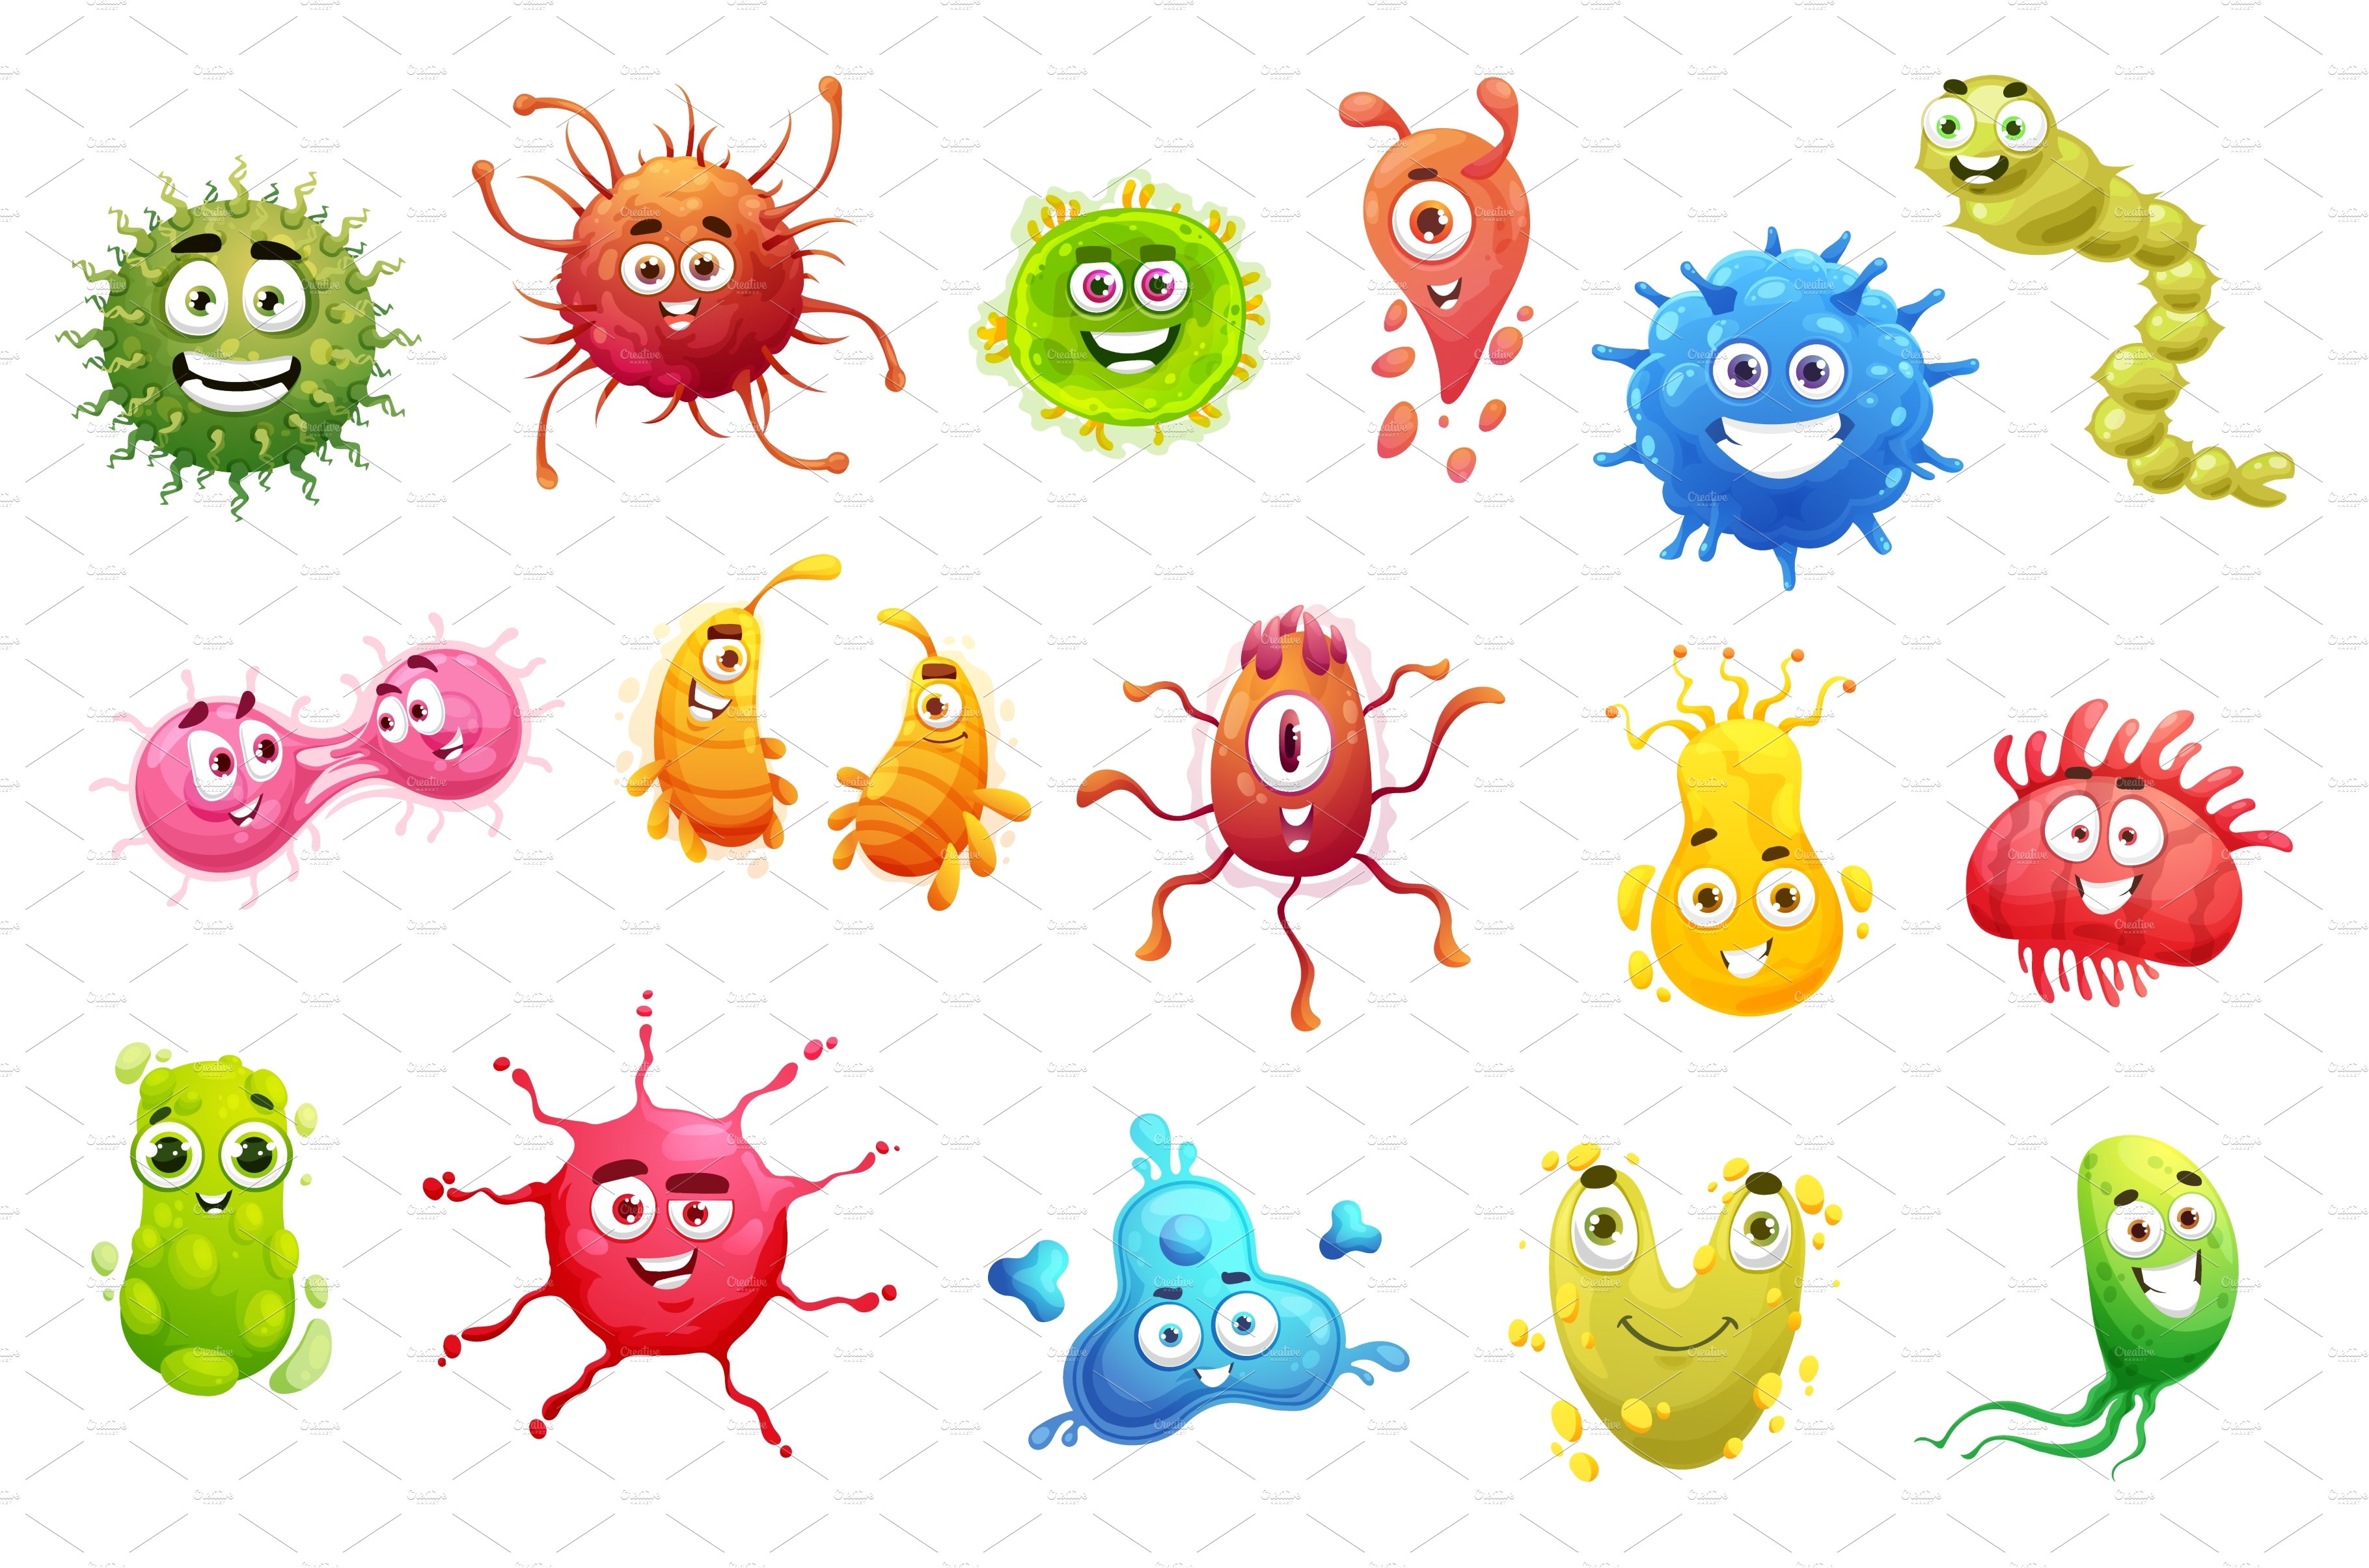 Cartoon viruses, bacterias, germs cover image.